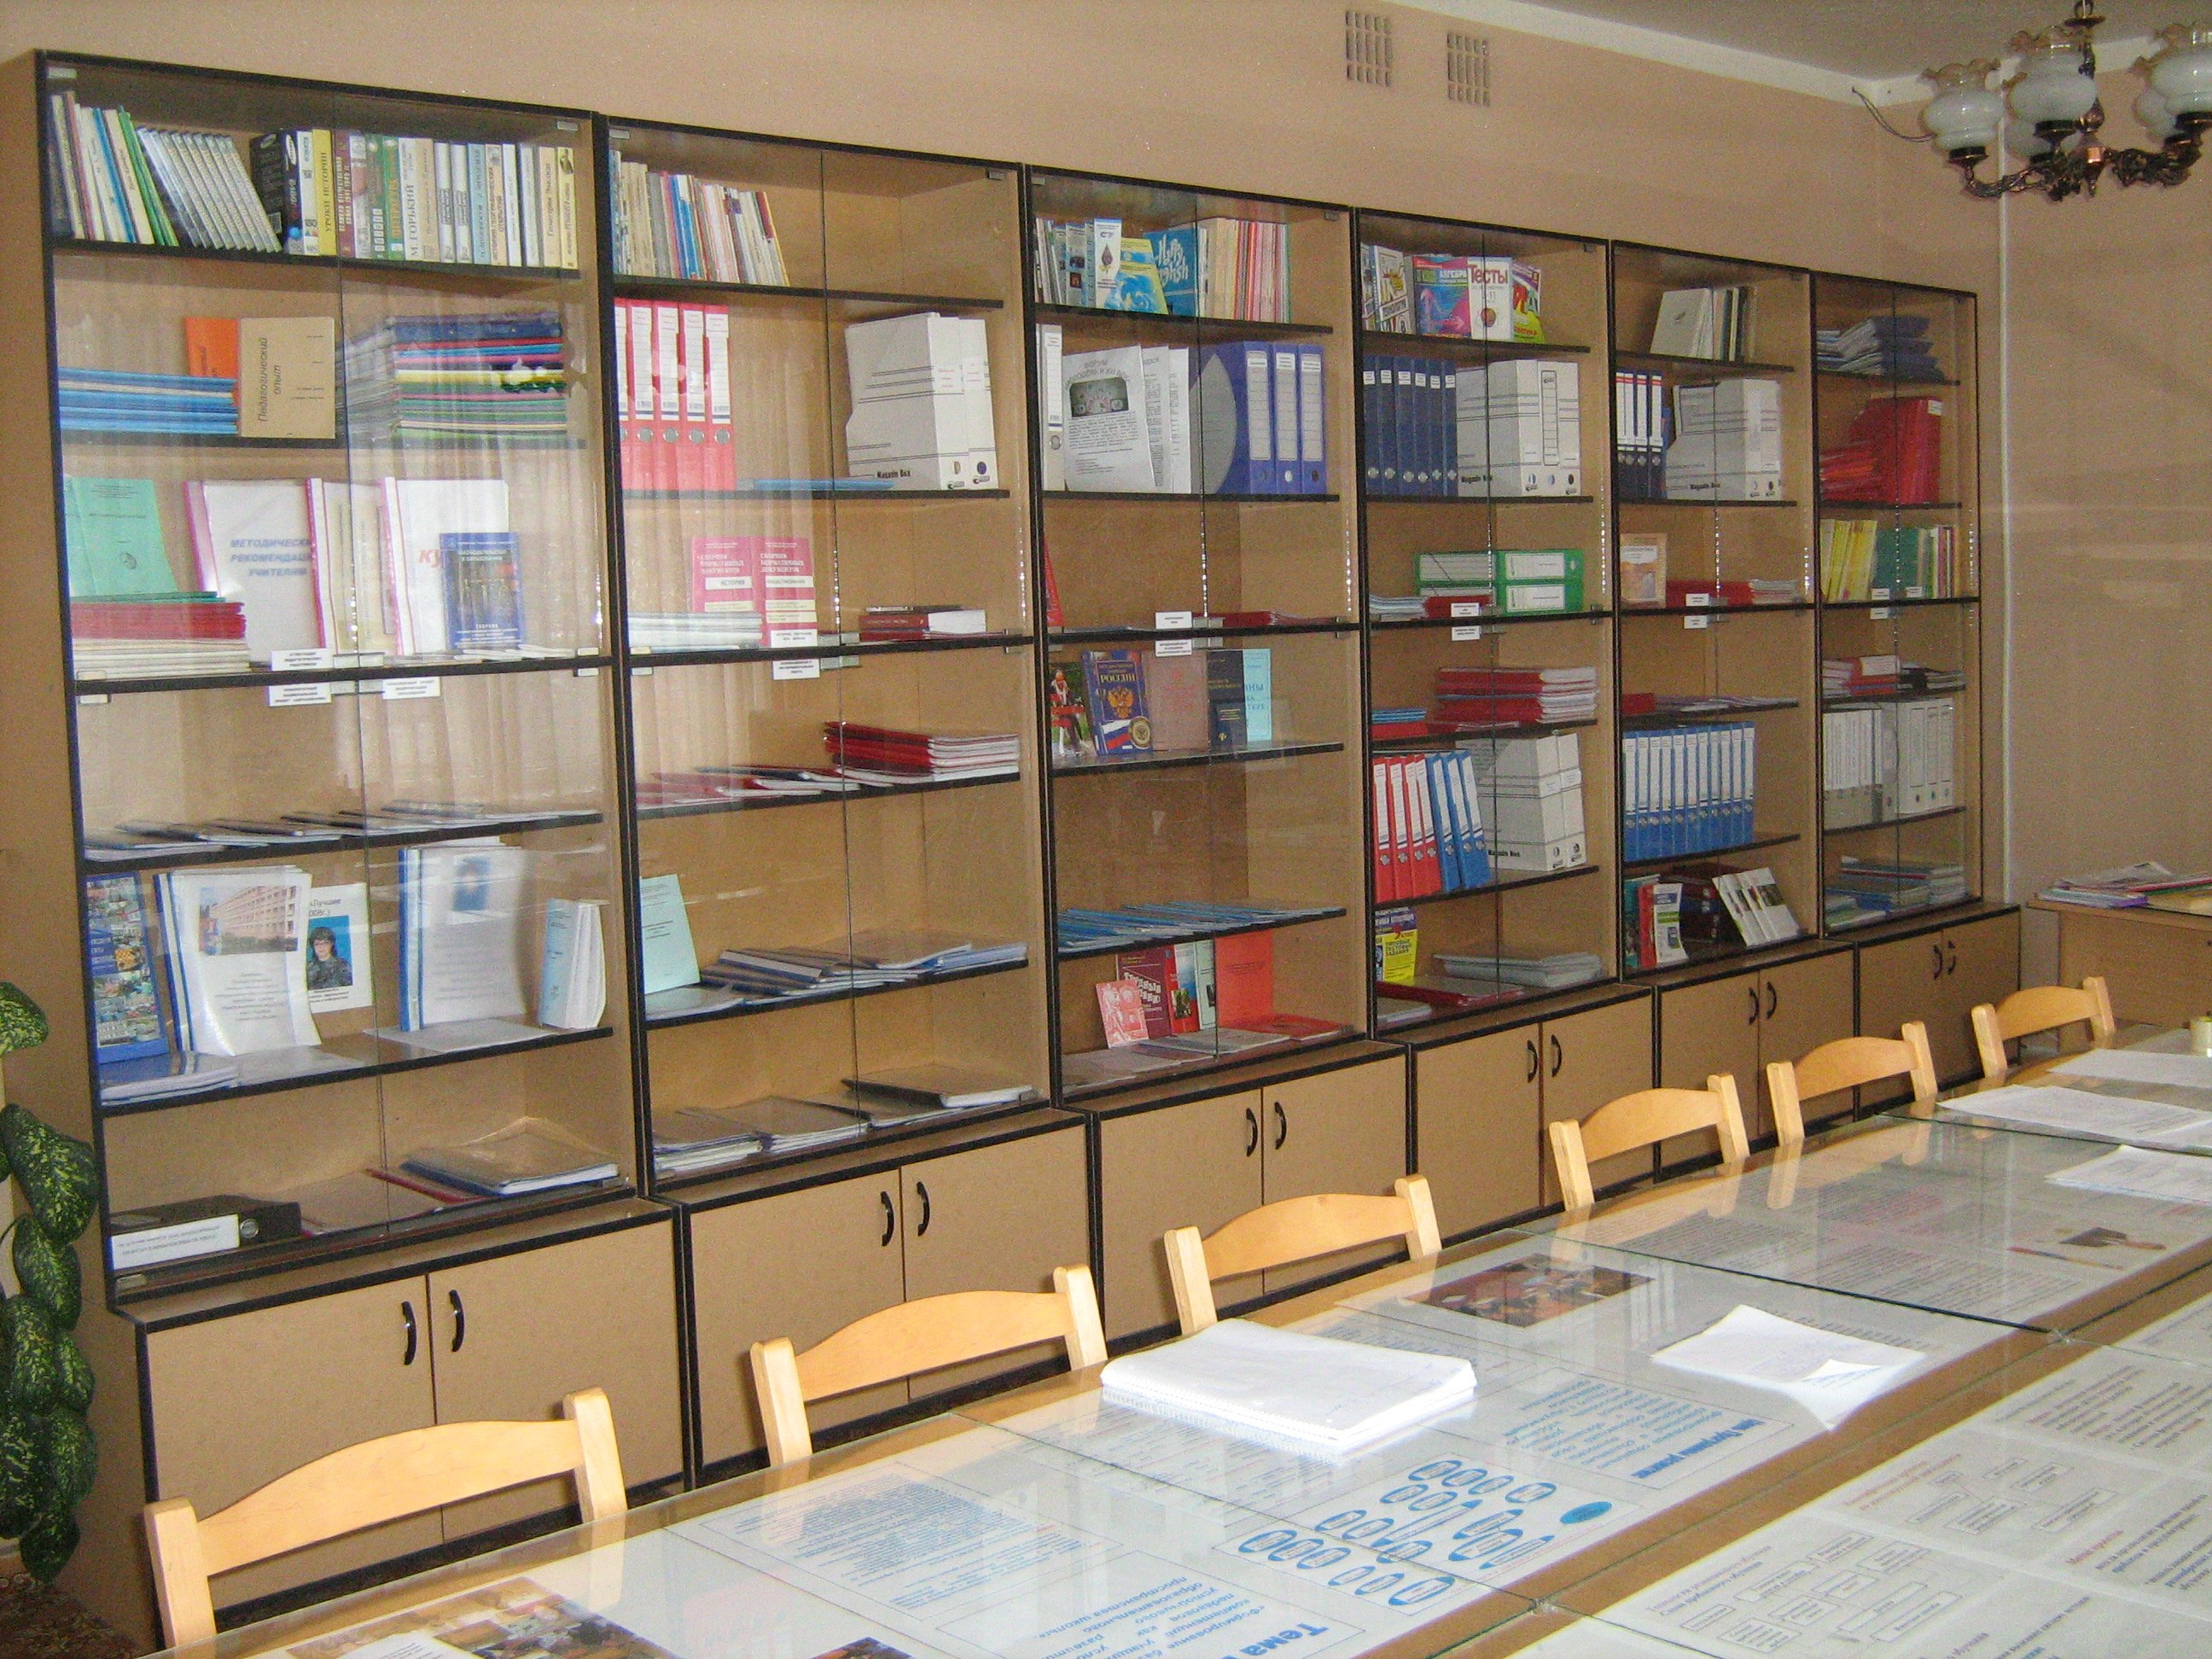 Методический отдел библиотеки